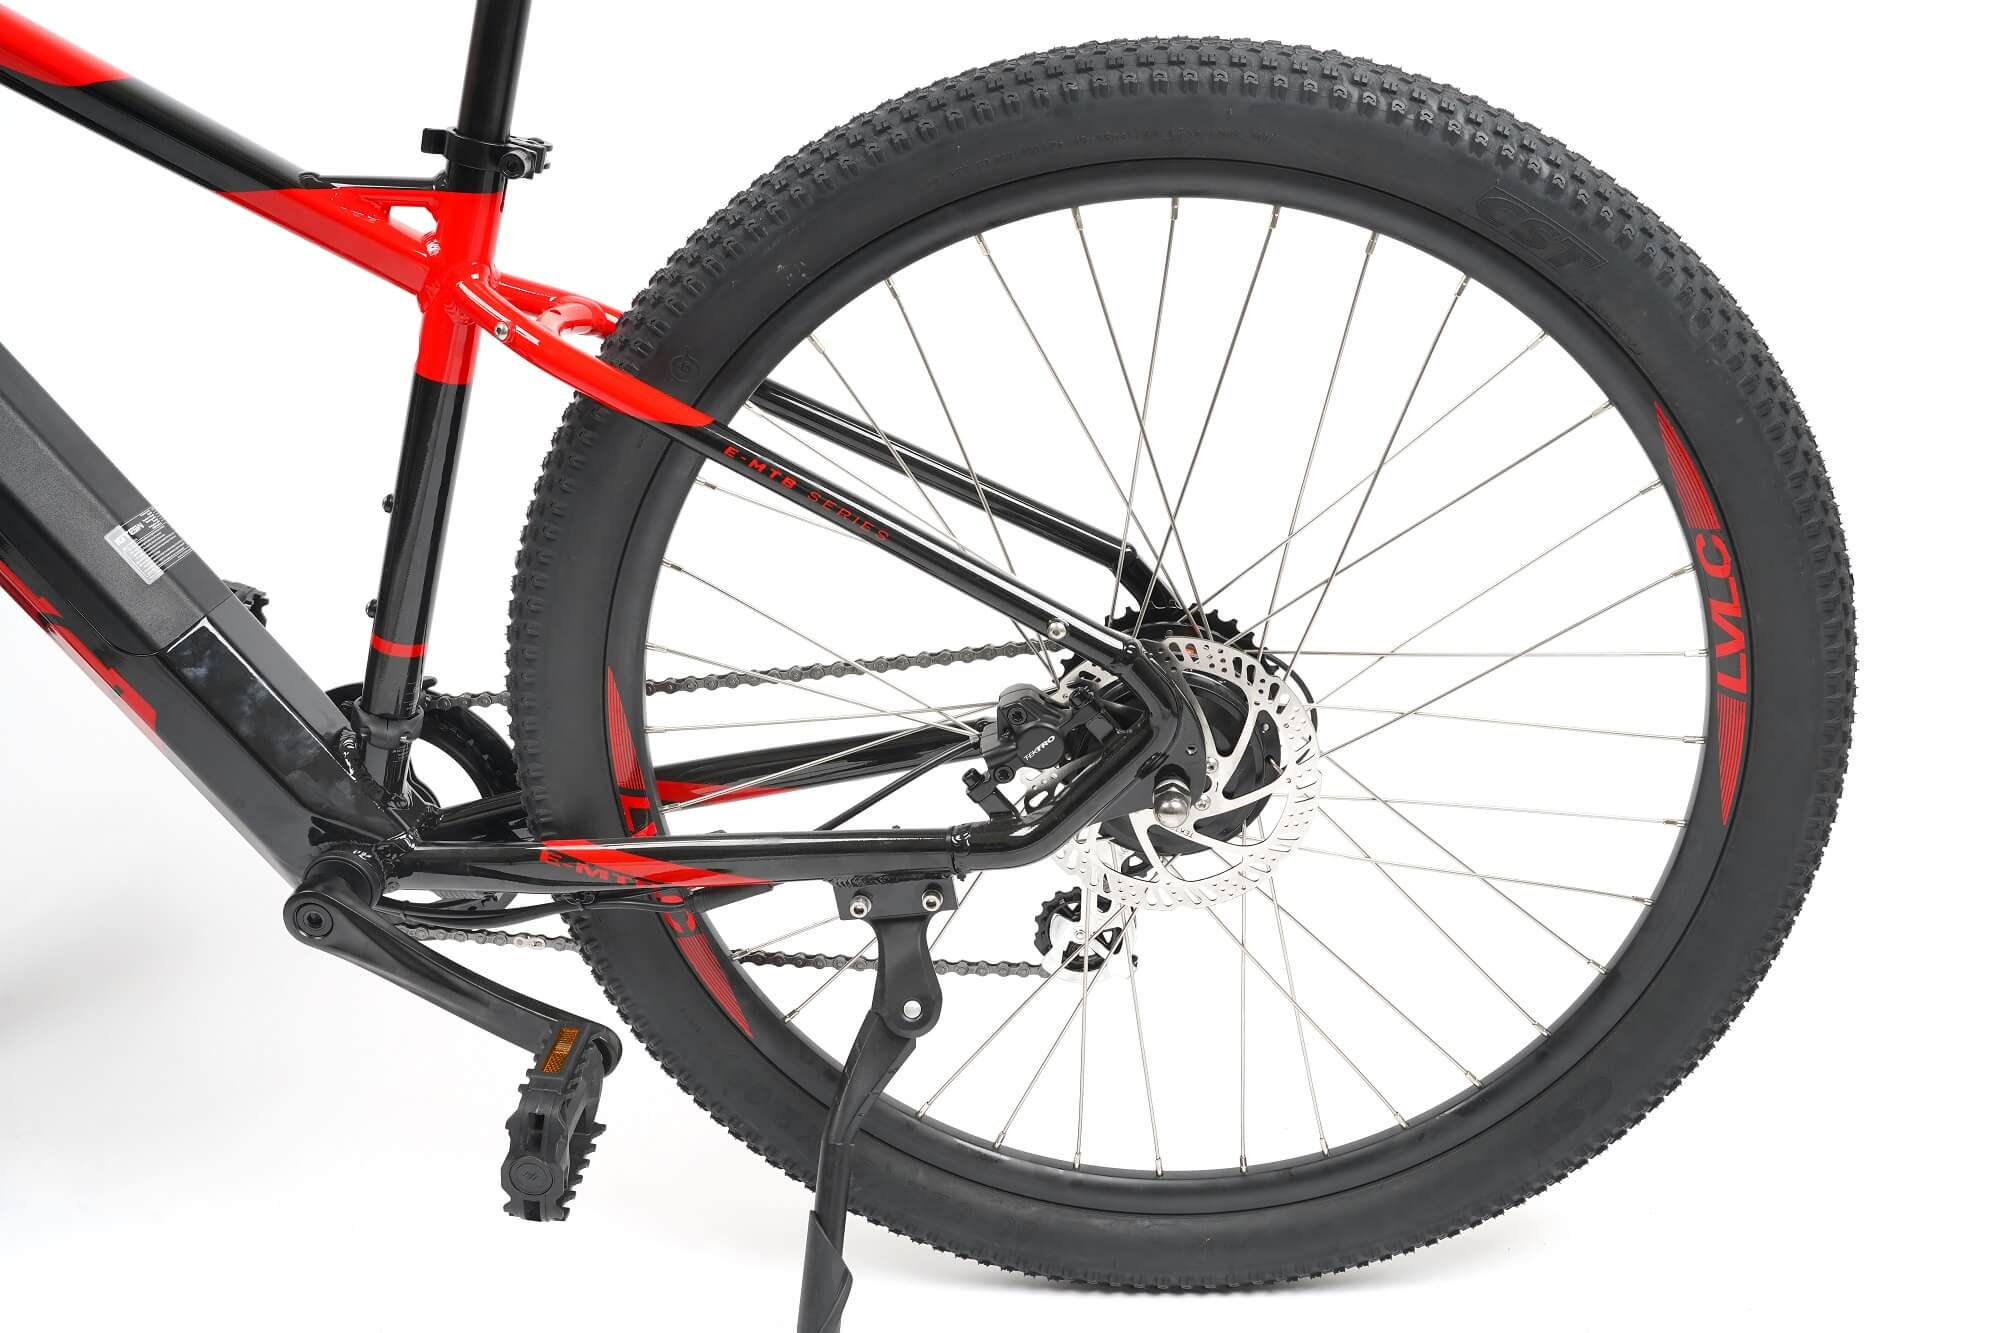 LOVELEC B400347 Mountainbike (Laufradgröße: 29 schwarz/rot) cm, Zoll, Wh, Erwachsene-Rad, 540 Rahmenhöhe: 43,18